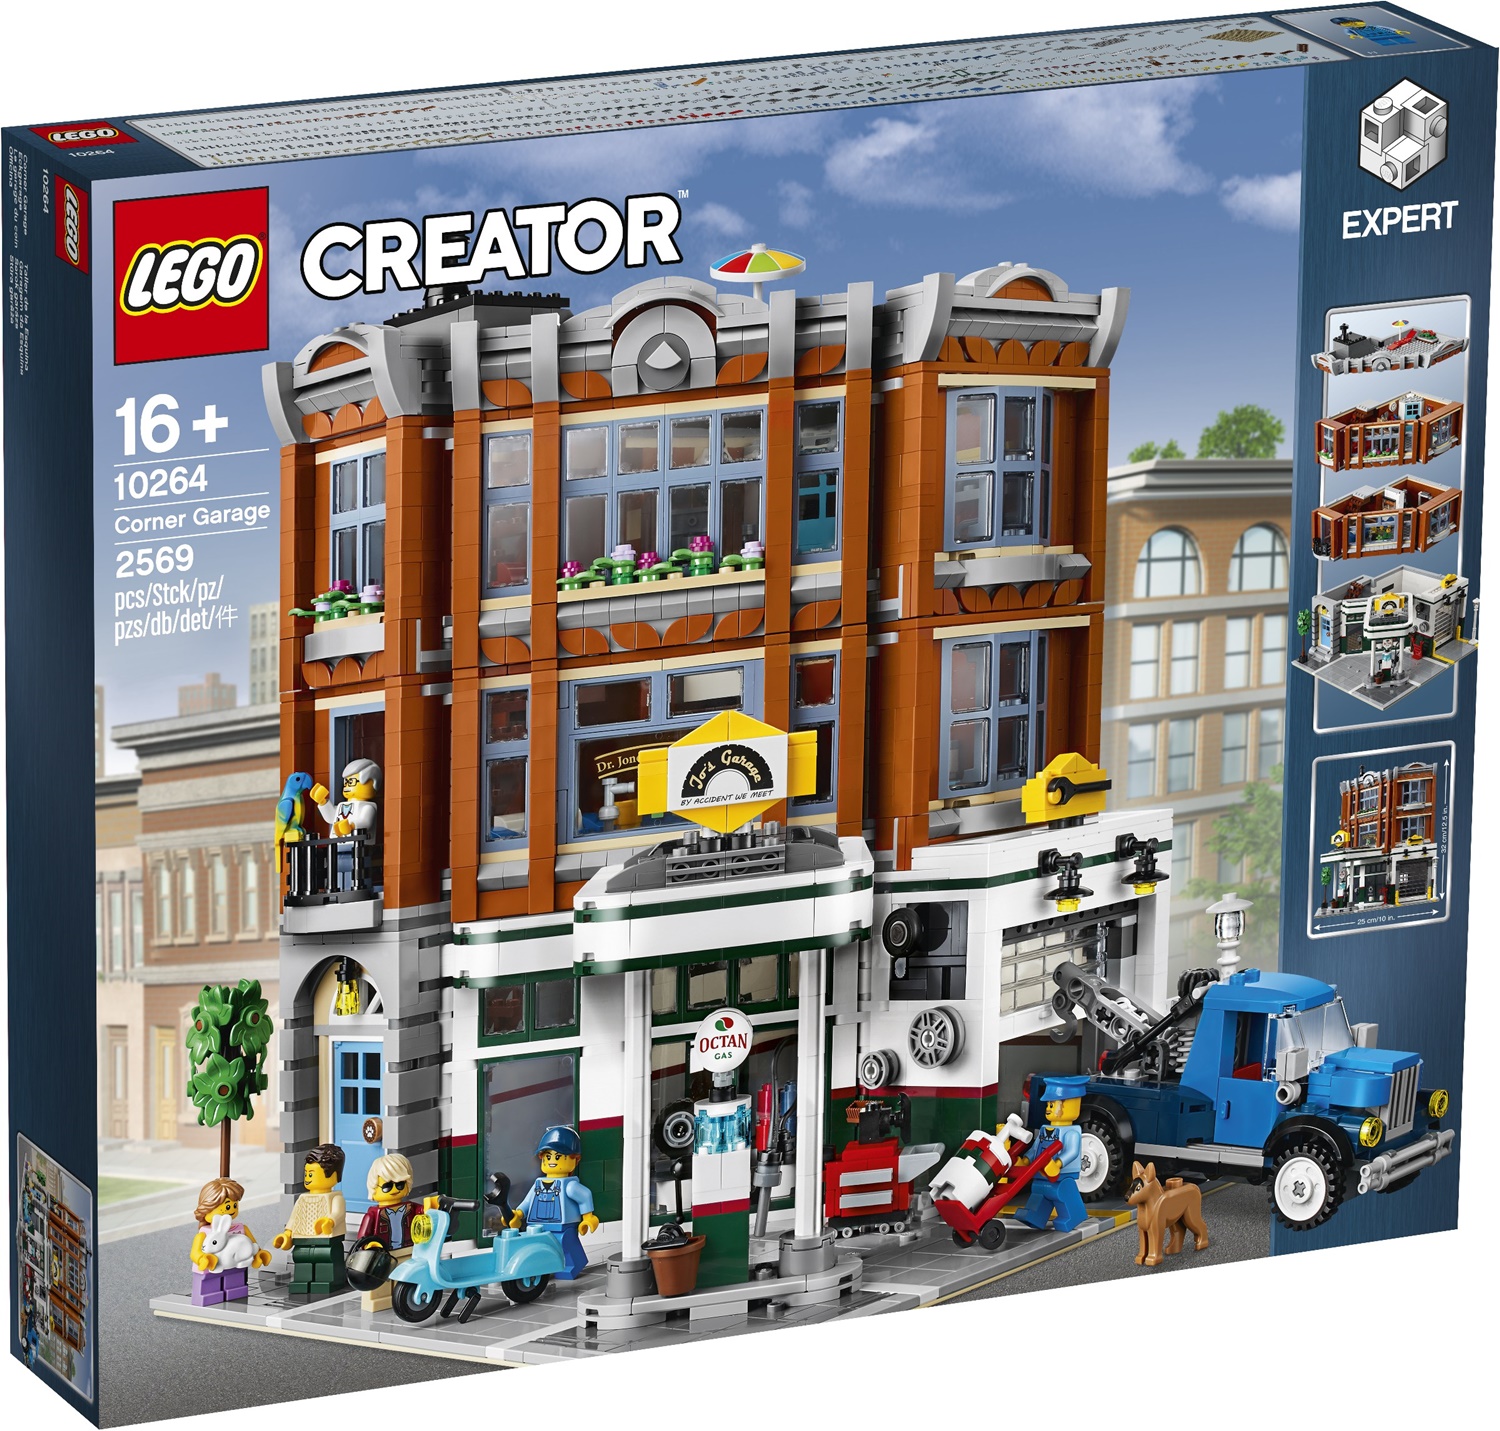 10264 LEGO Creator Expert Corner Garage